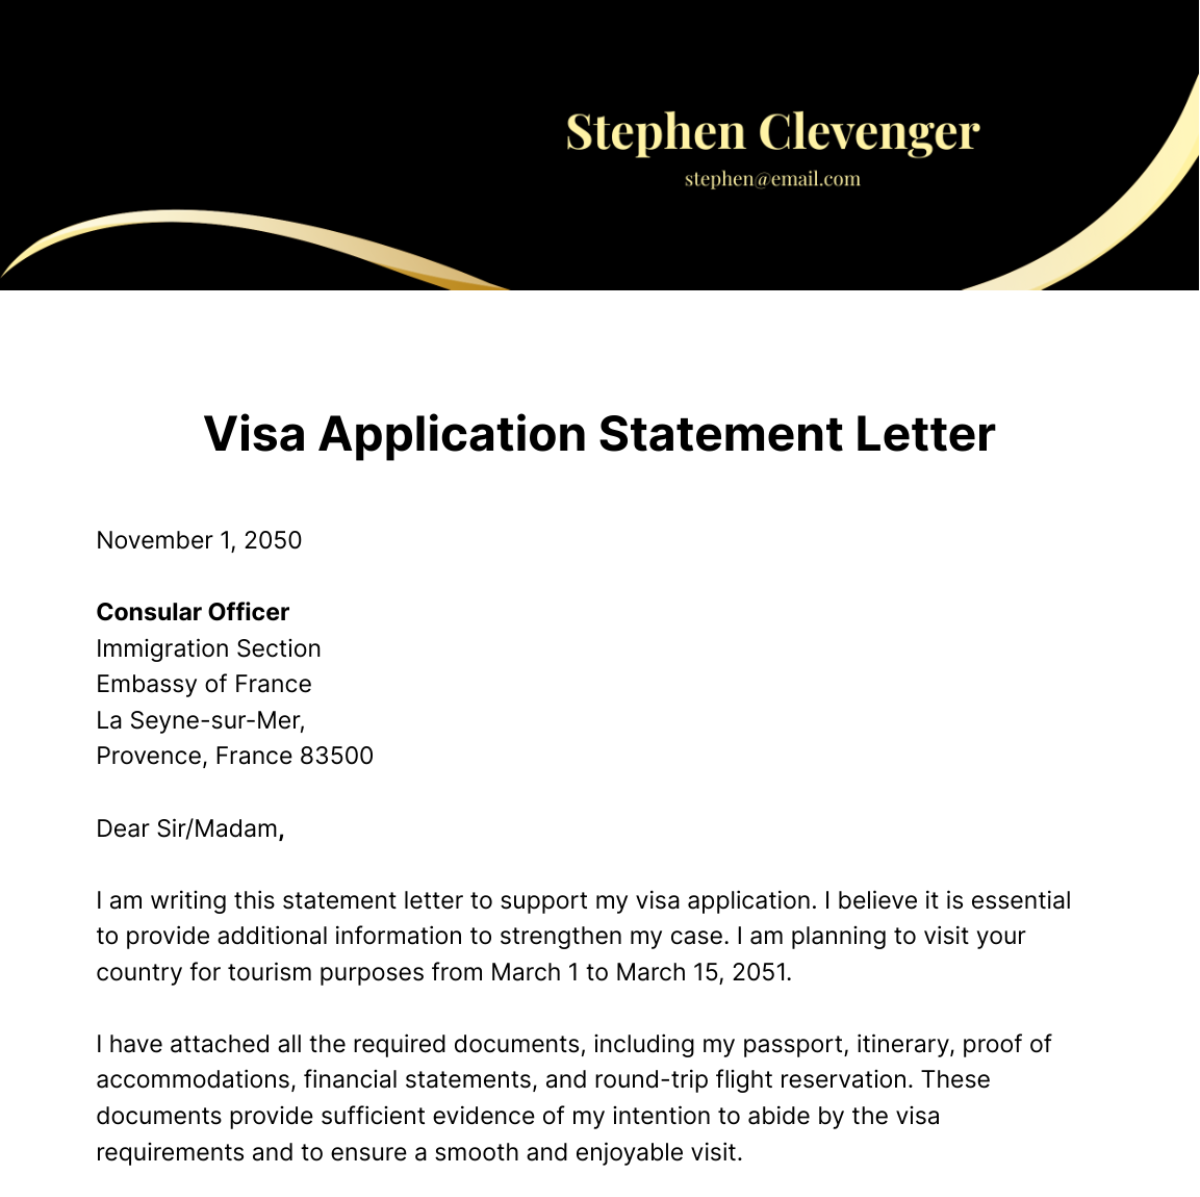 Visa Application Statement Letter Template